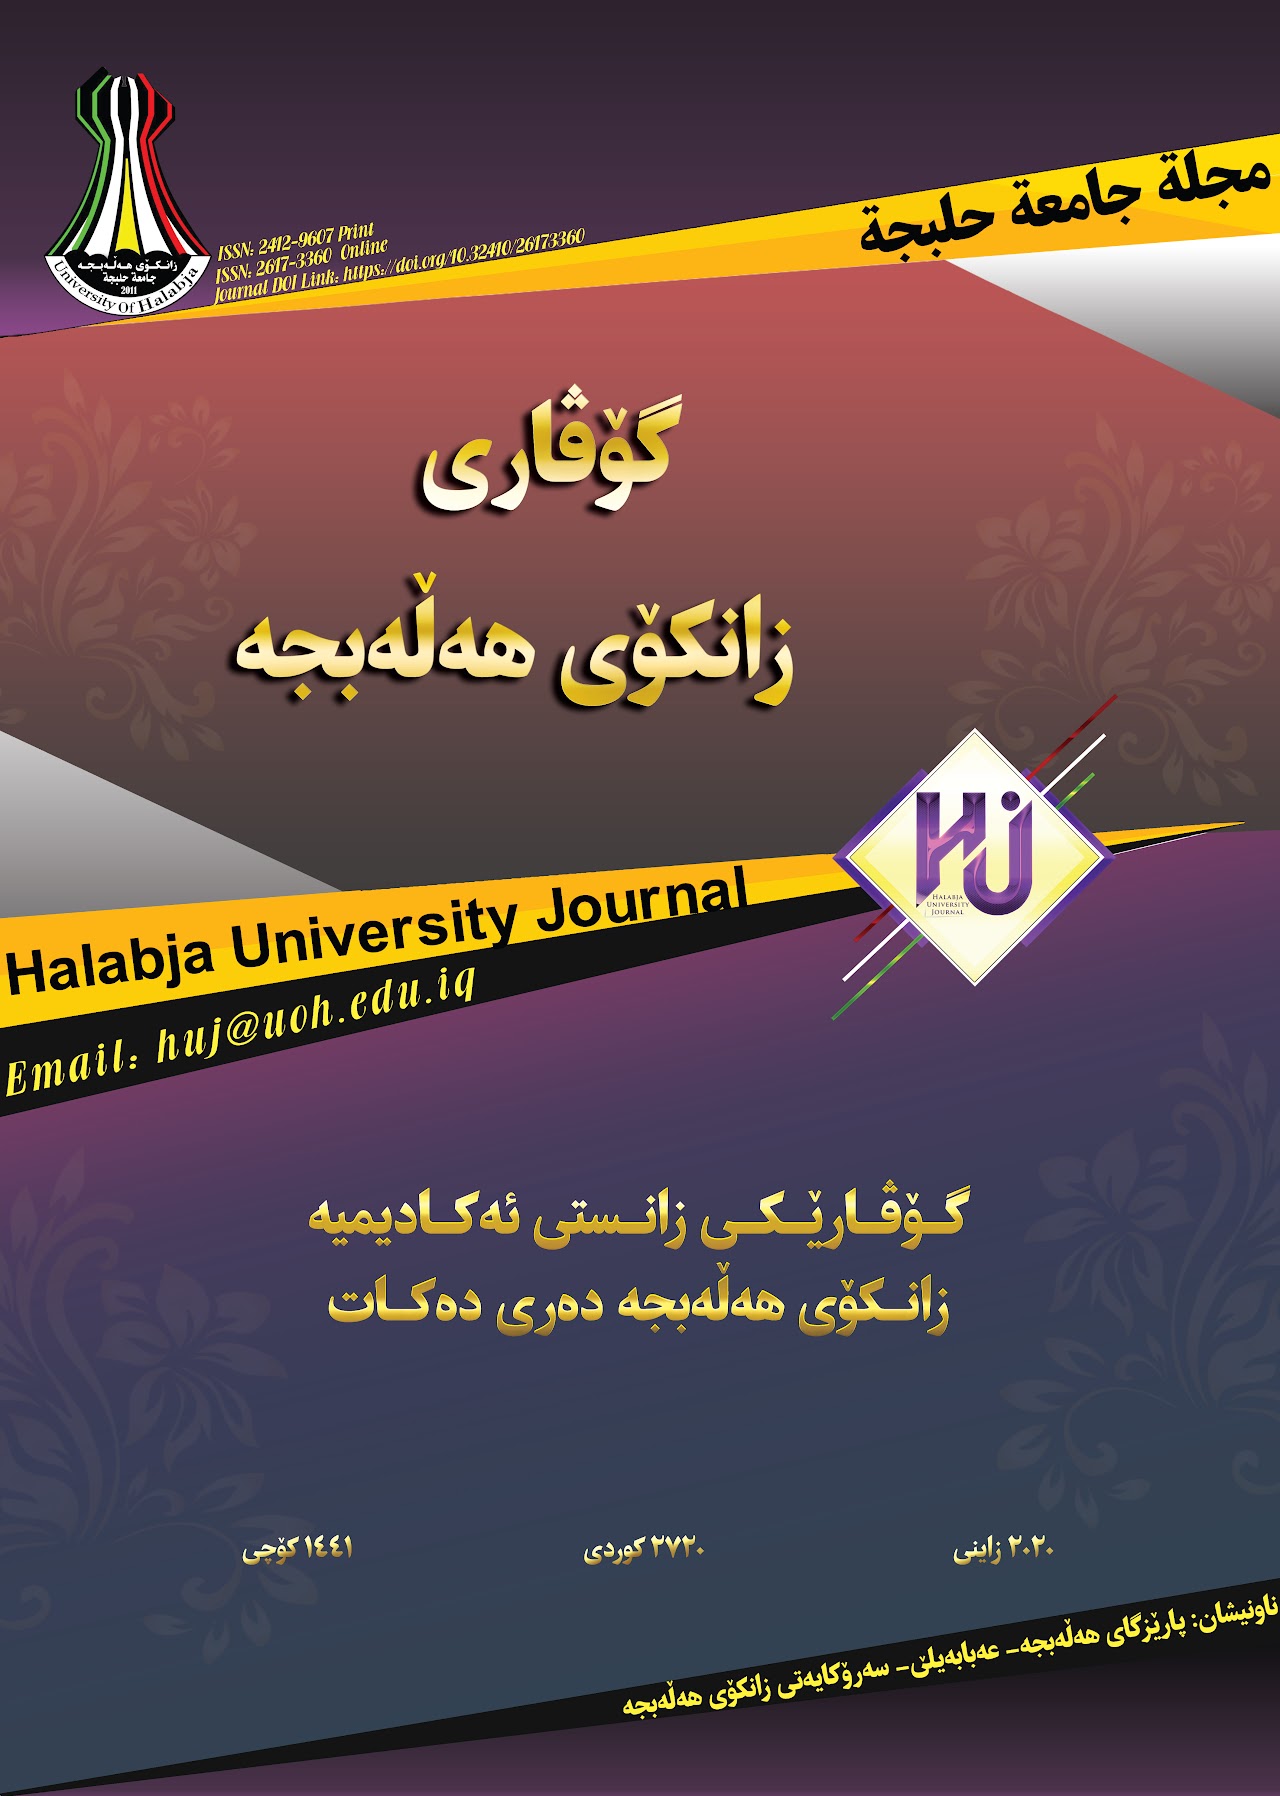 Halabja University Journal